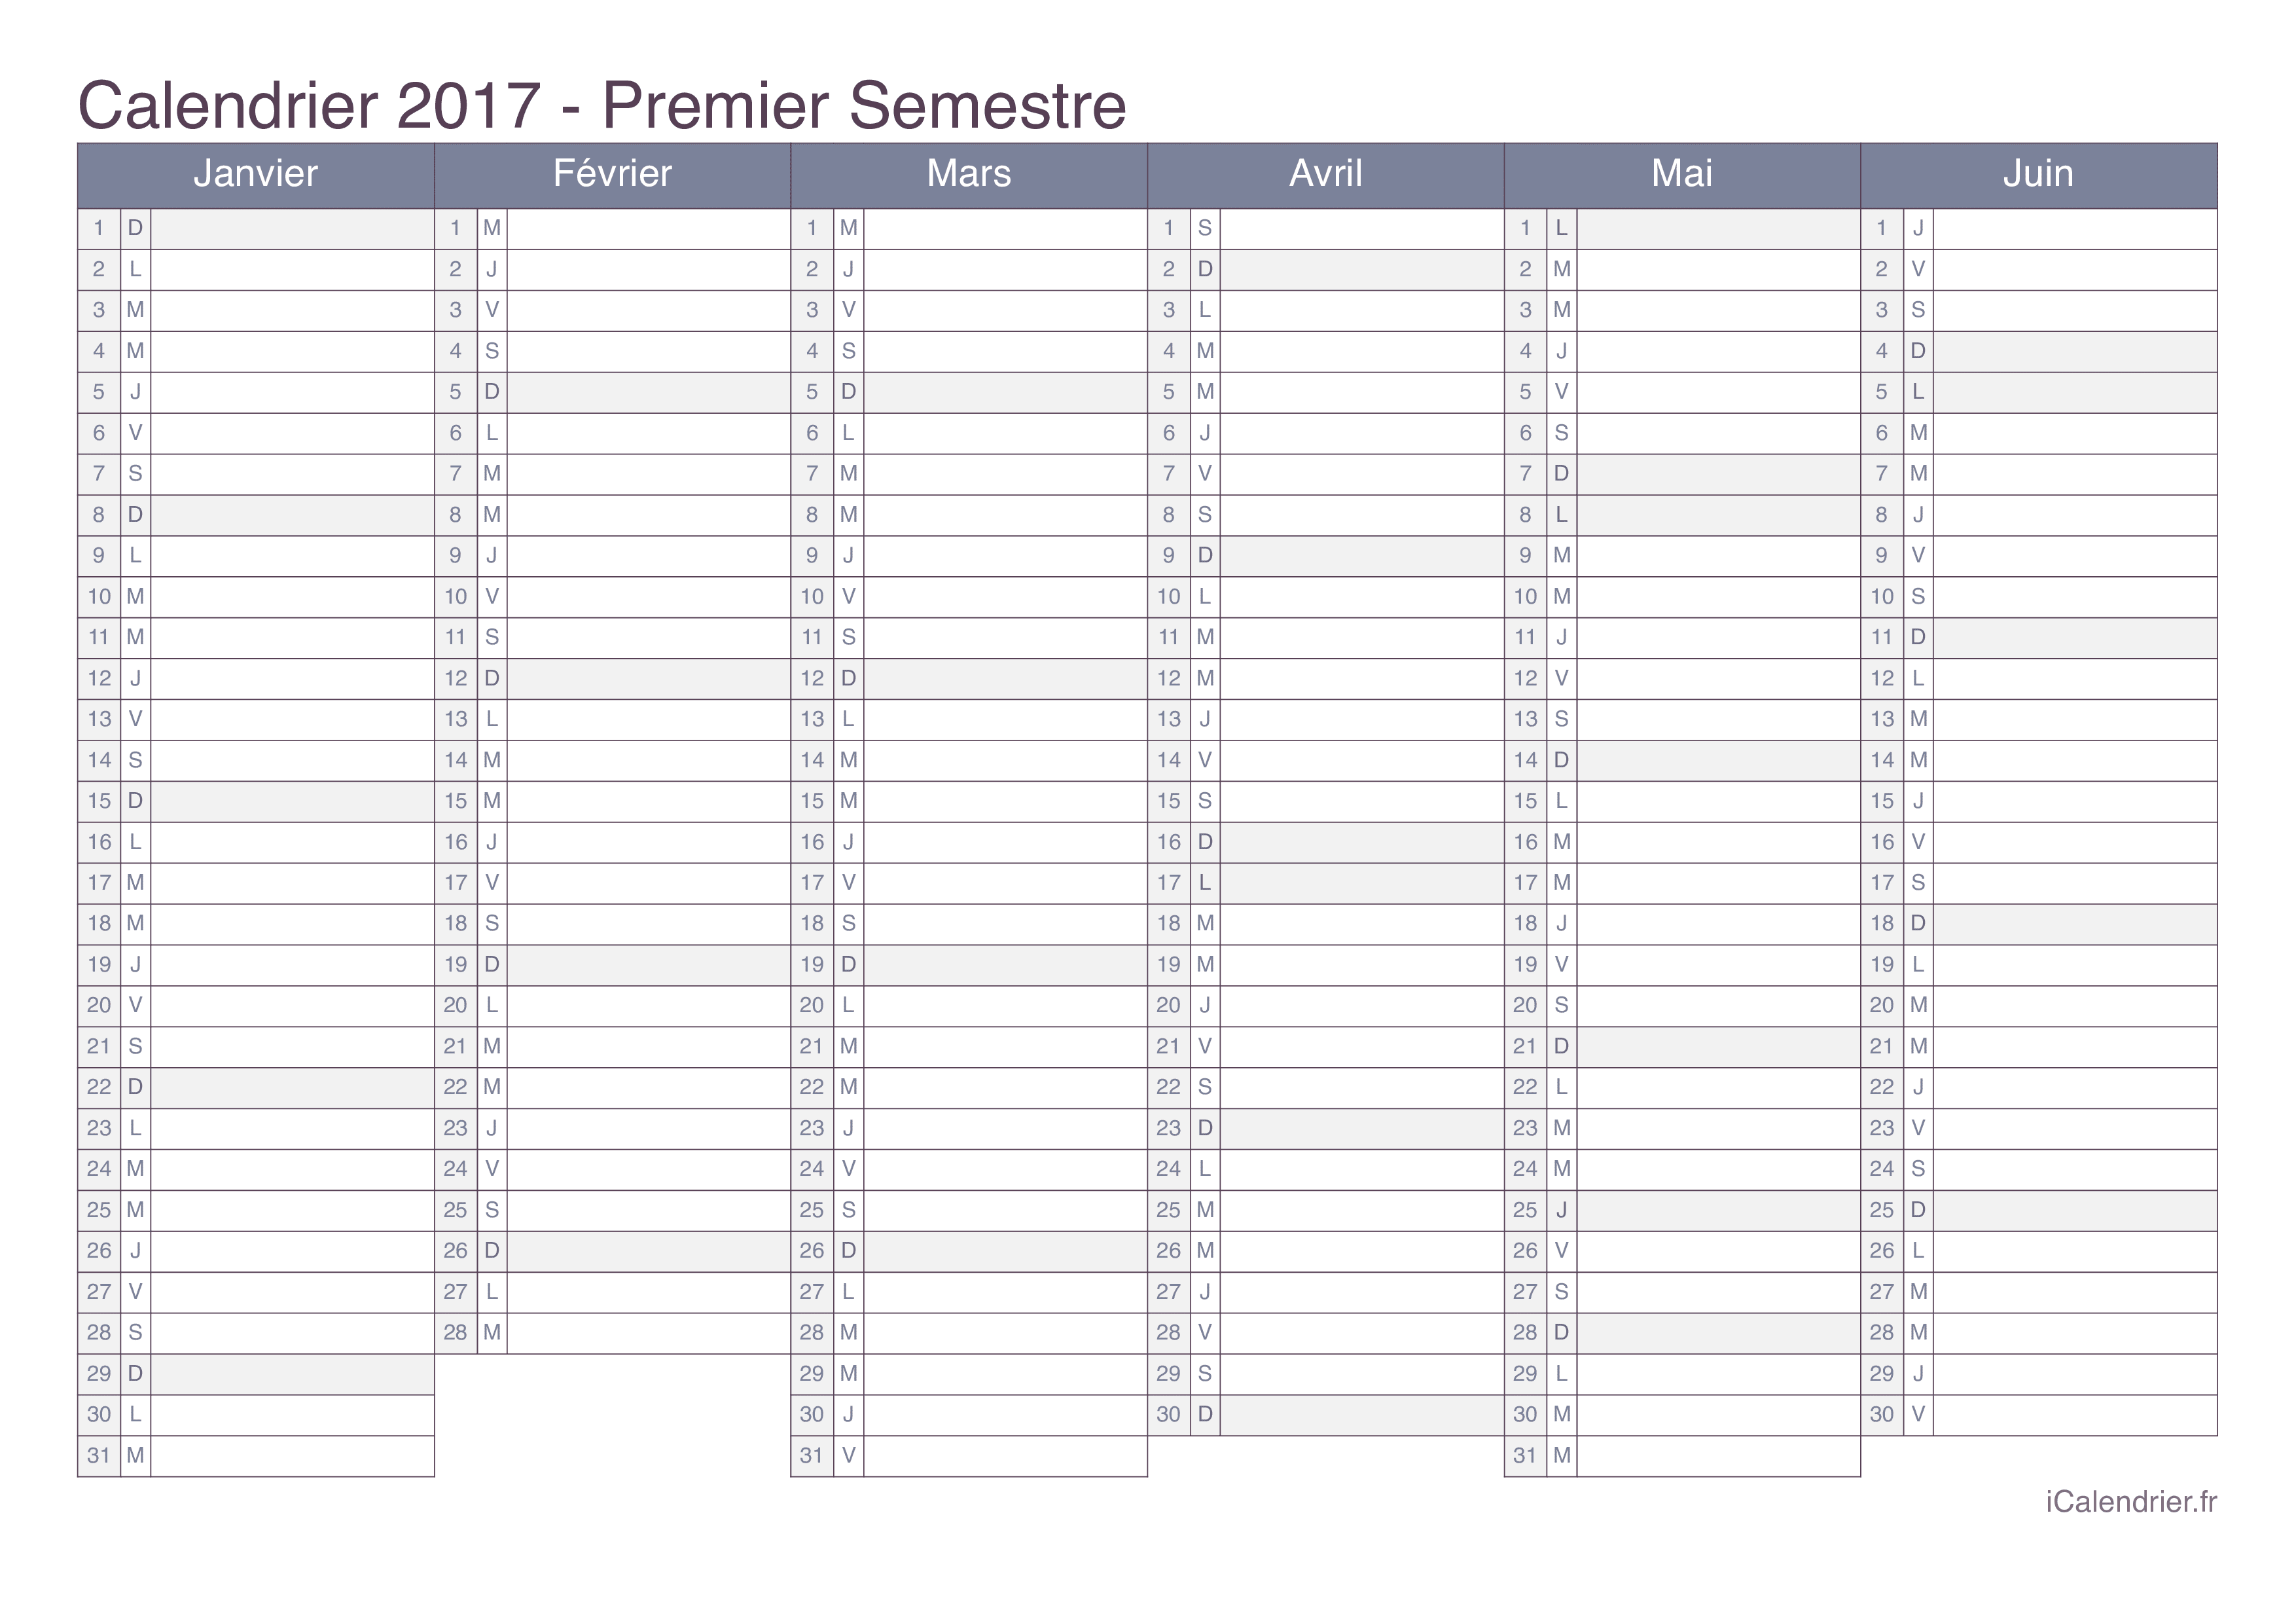 Calendrier par semestre 2017 - Office